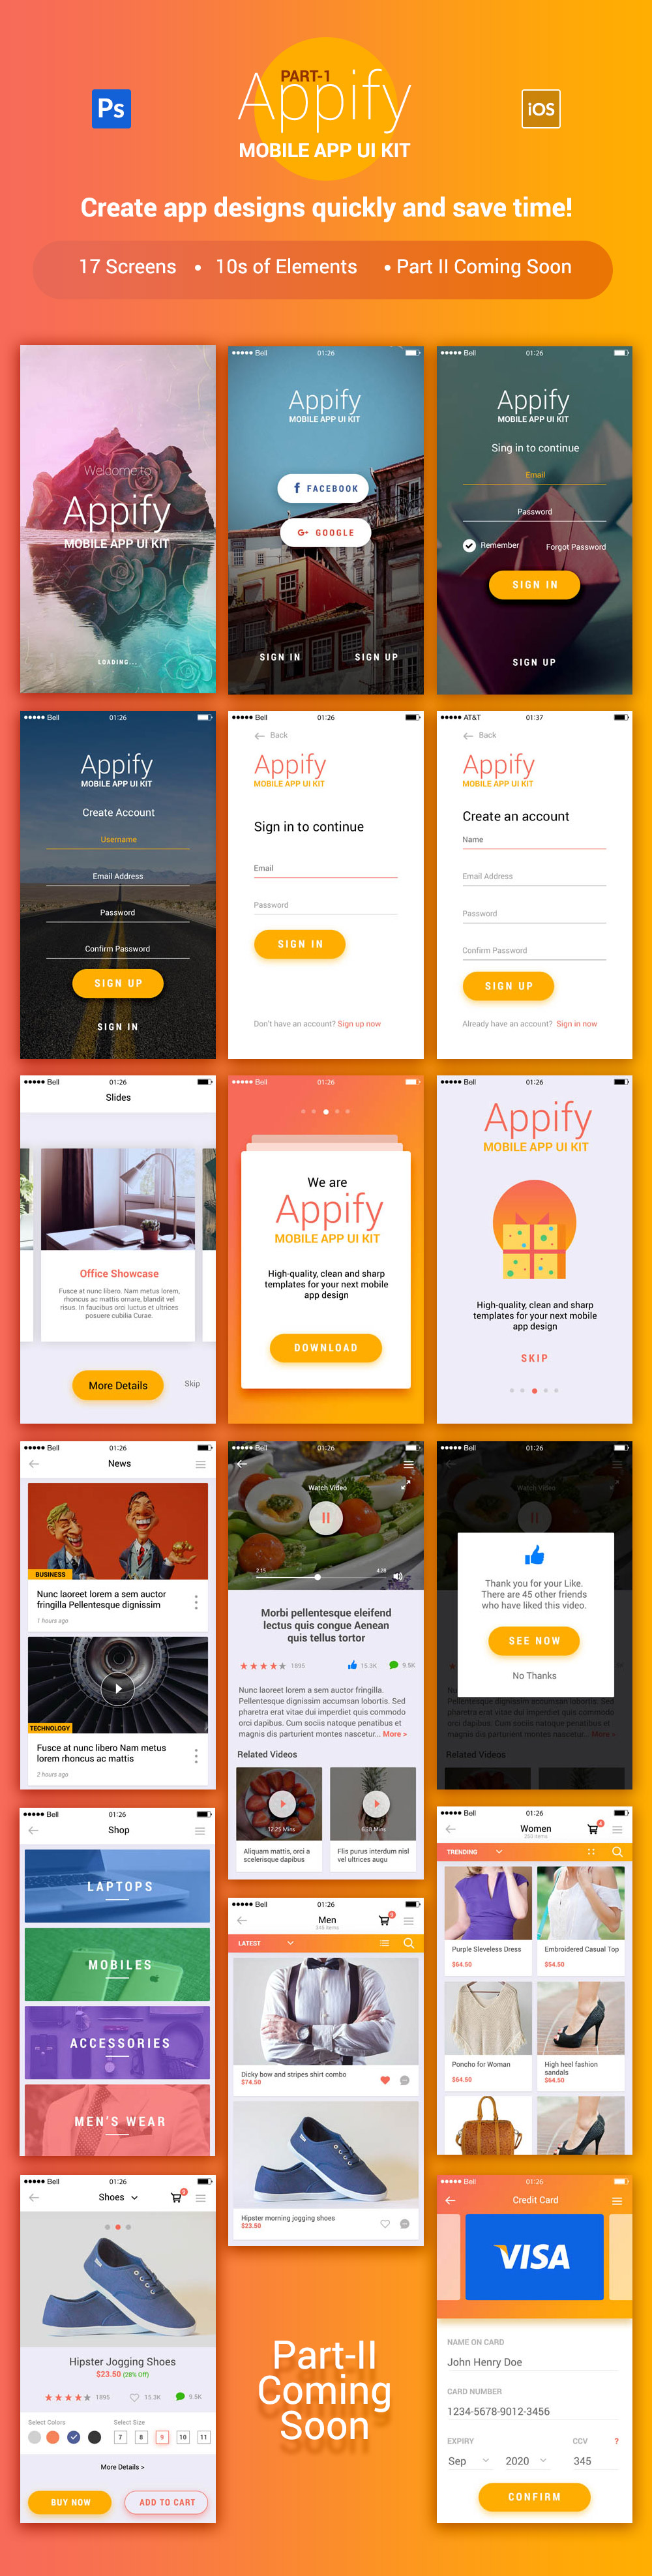 Appify Mobile App UI Kit